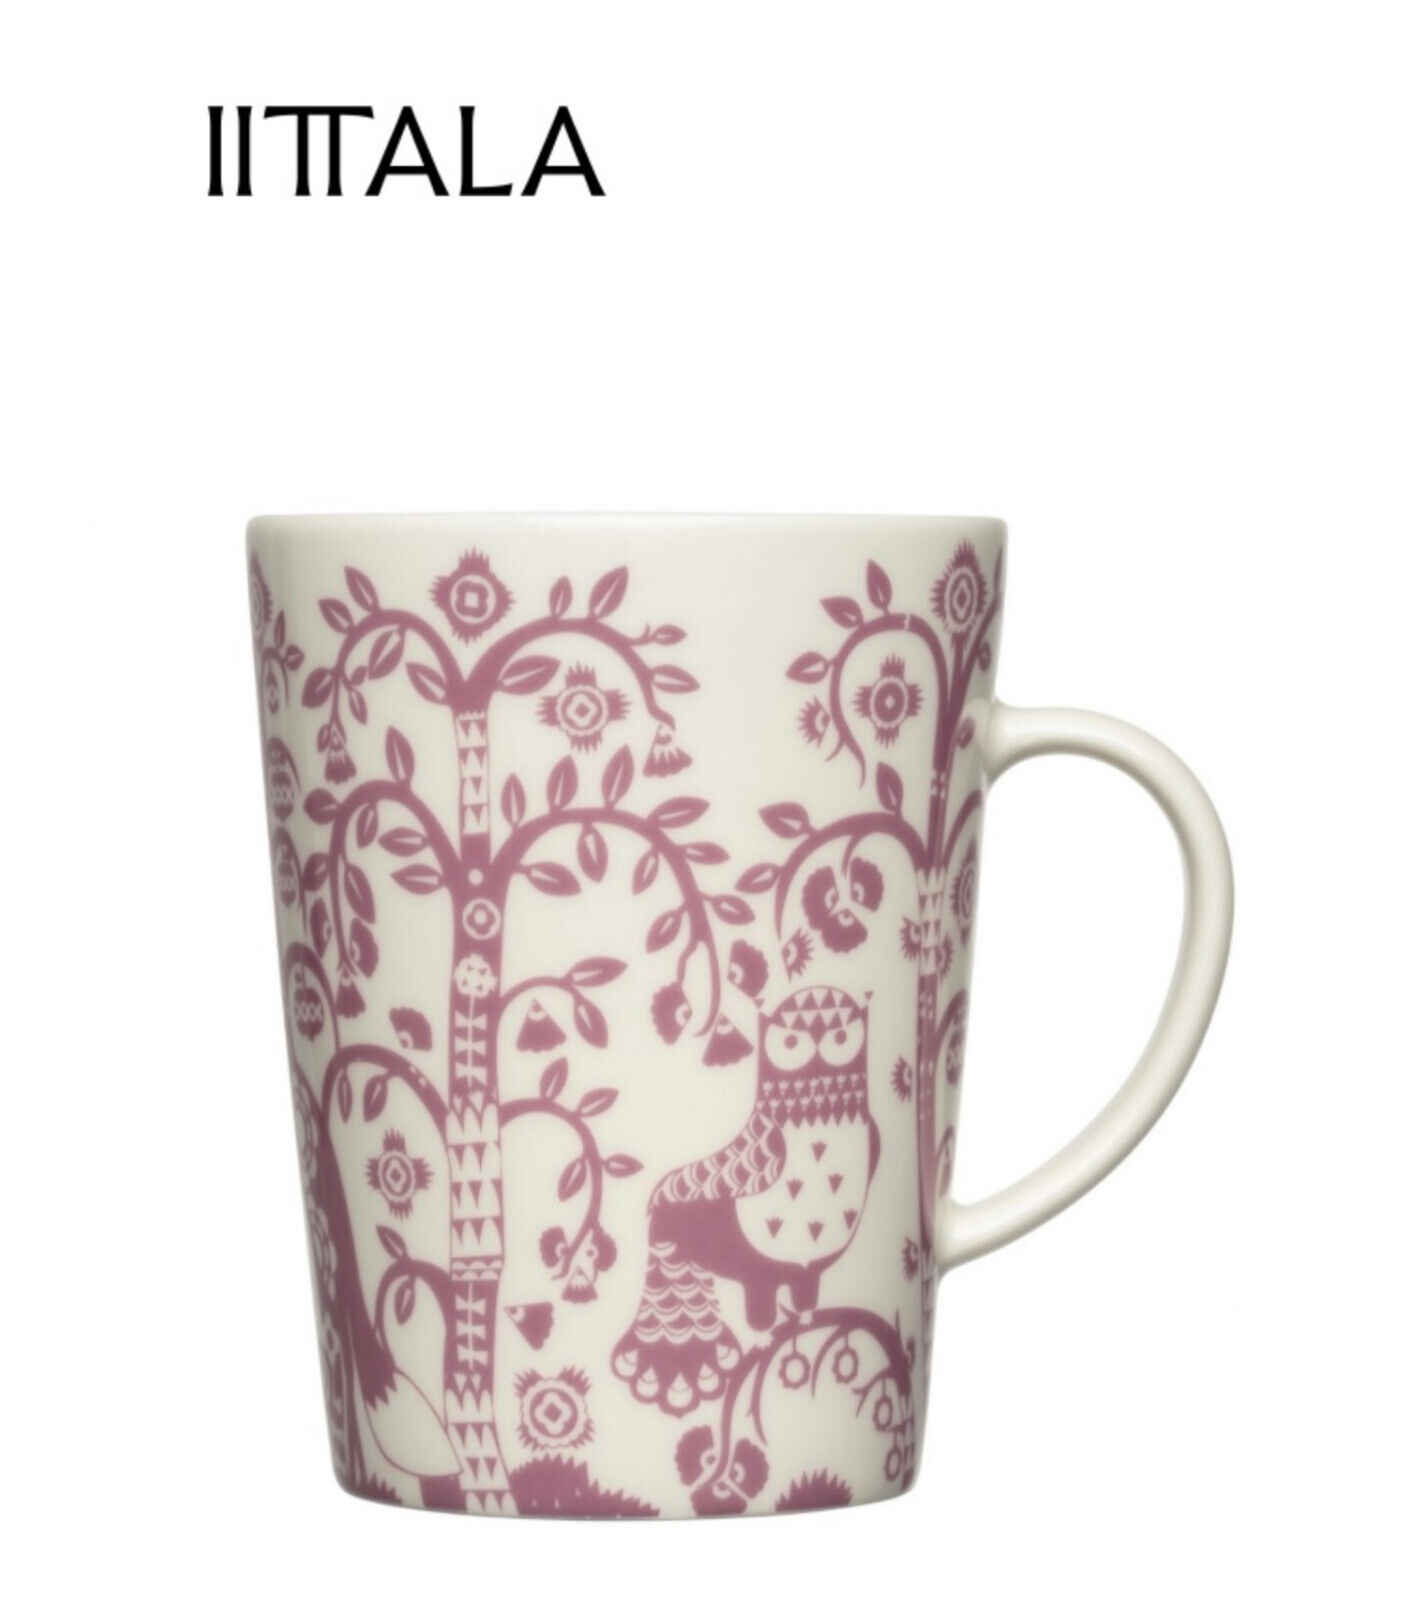 Iittala Taika Mug 0.4 L Pink Colour Limited edition for Tea or Coffee NEW